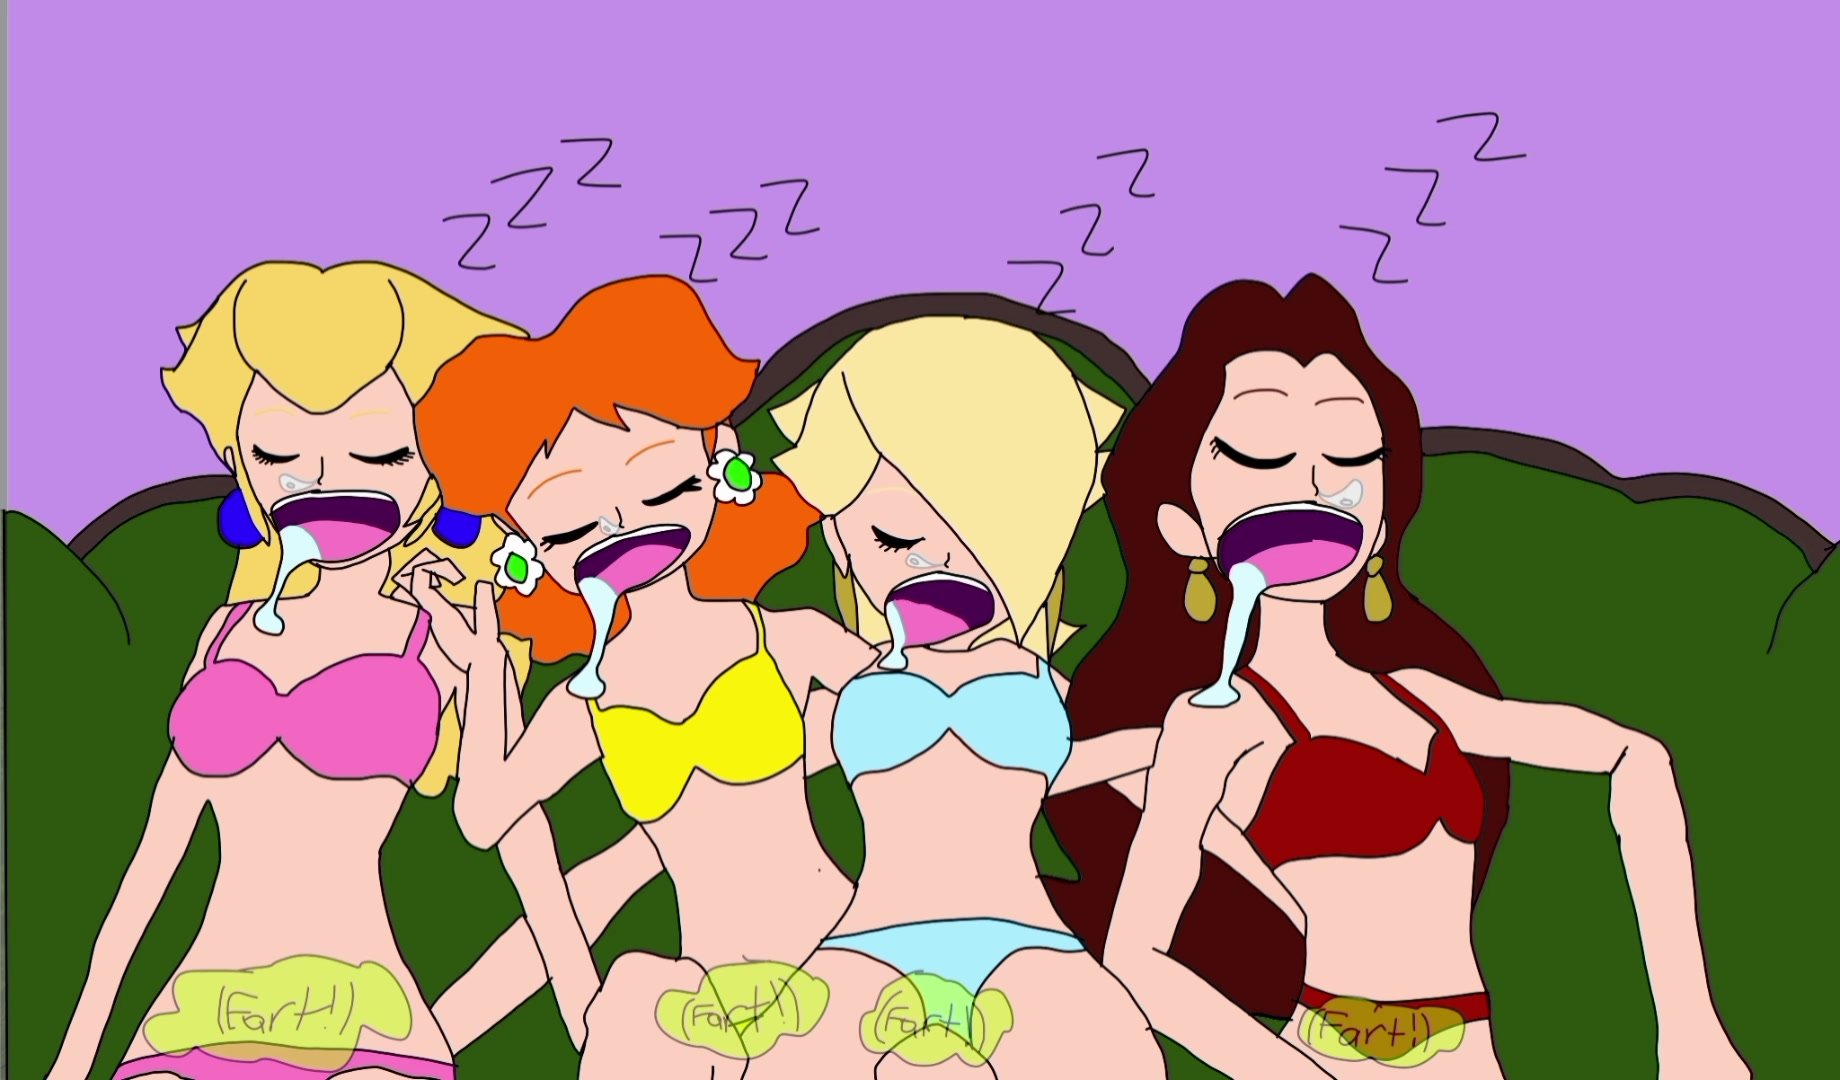 Princesses farting while sleeping